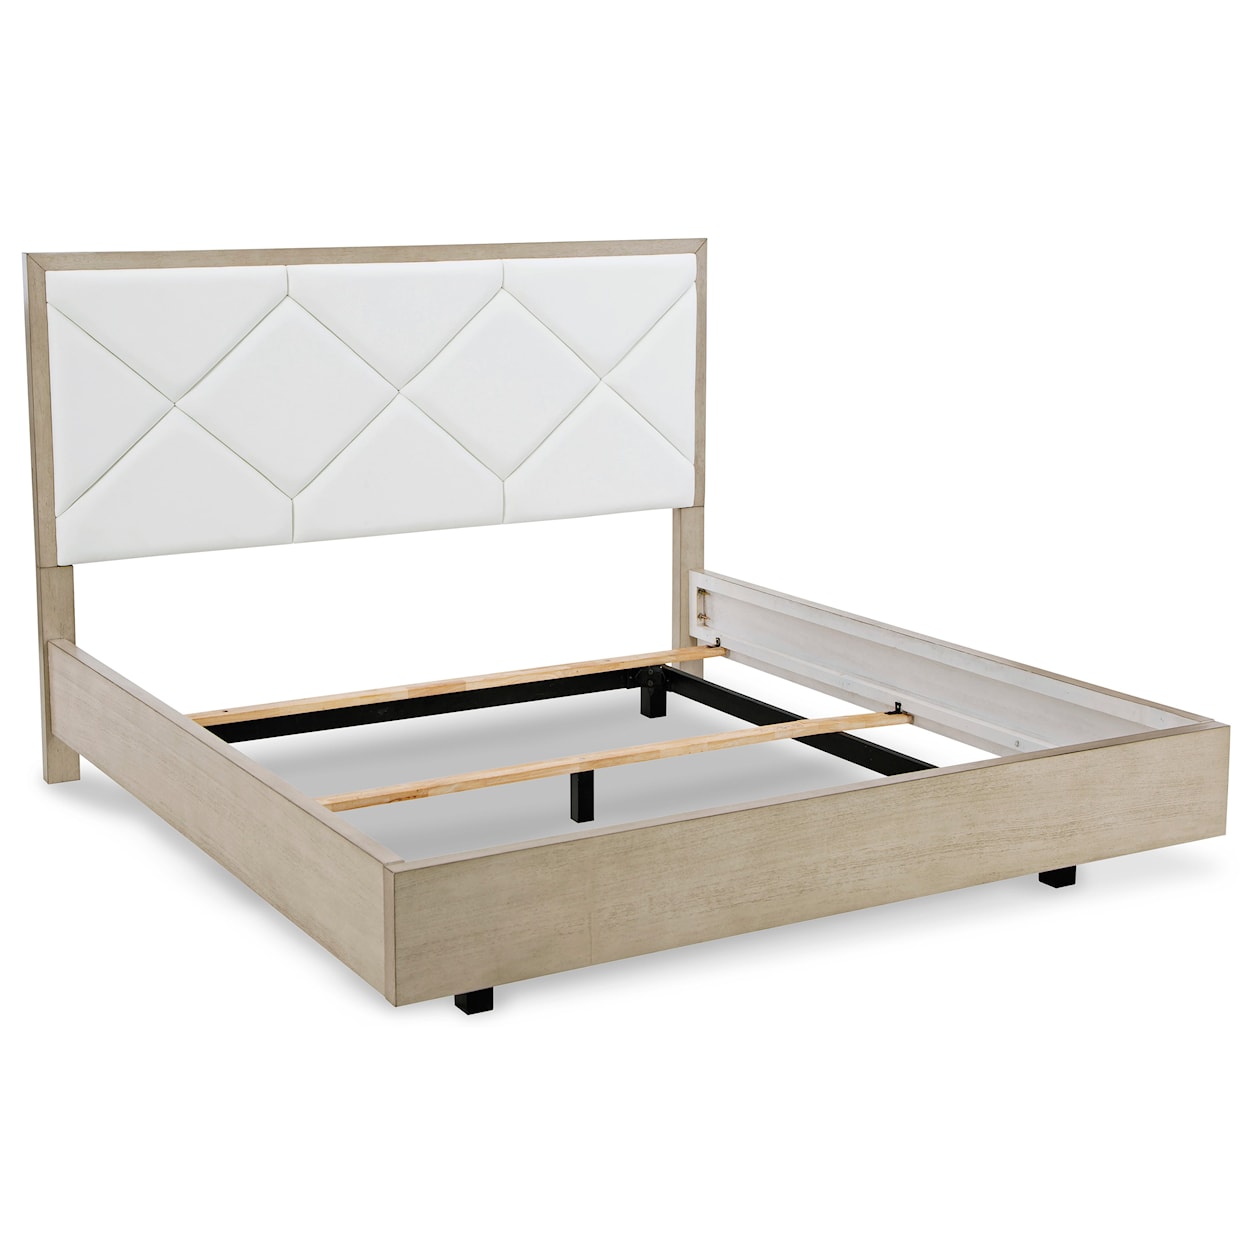 Ashley Furniture Signature Design Wendora California King Upholstered Bed